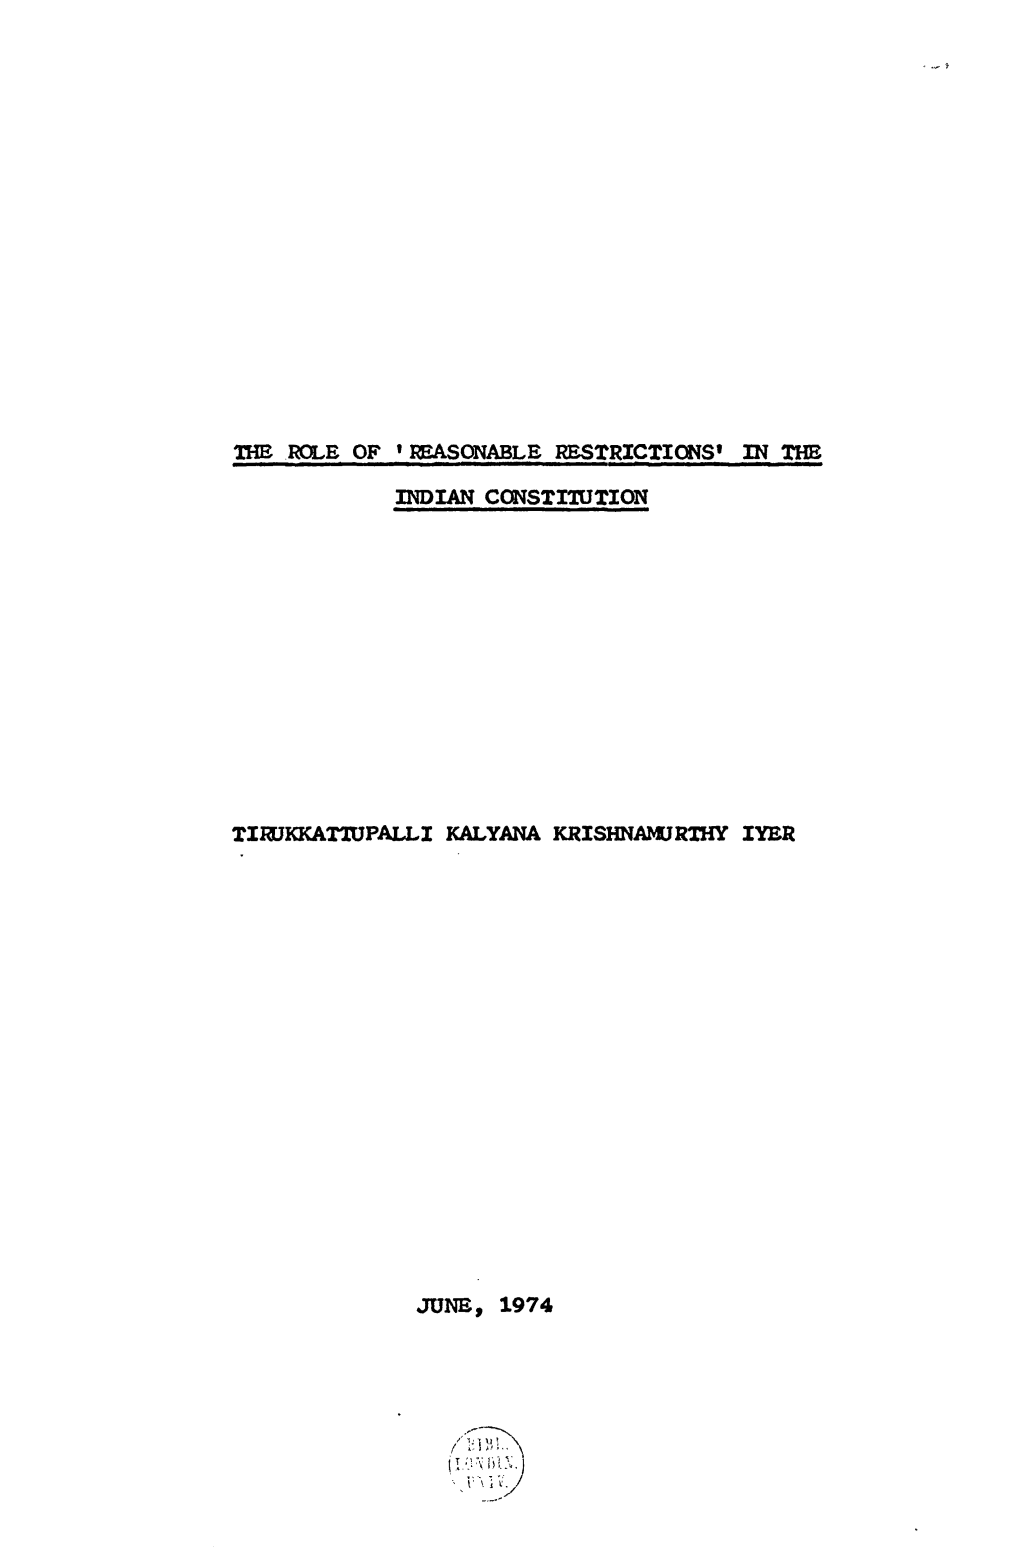 The Role of 1Reasonable Restrictions* in the Indian Constitution Tirukkattupalli Kalyana Krishnamurthy Iyer June, 1974